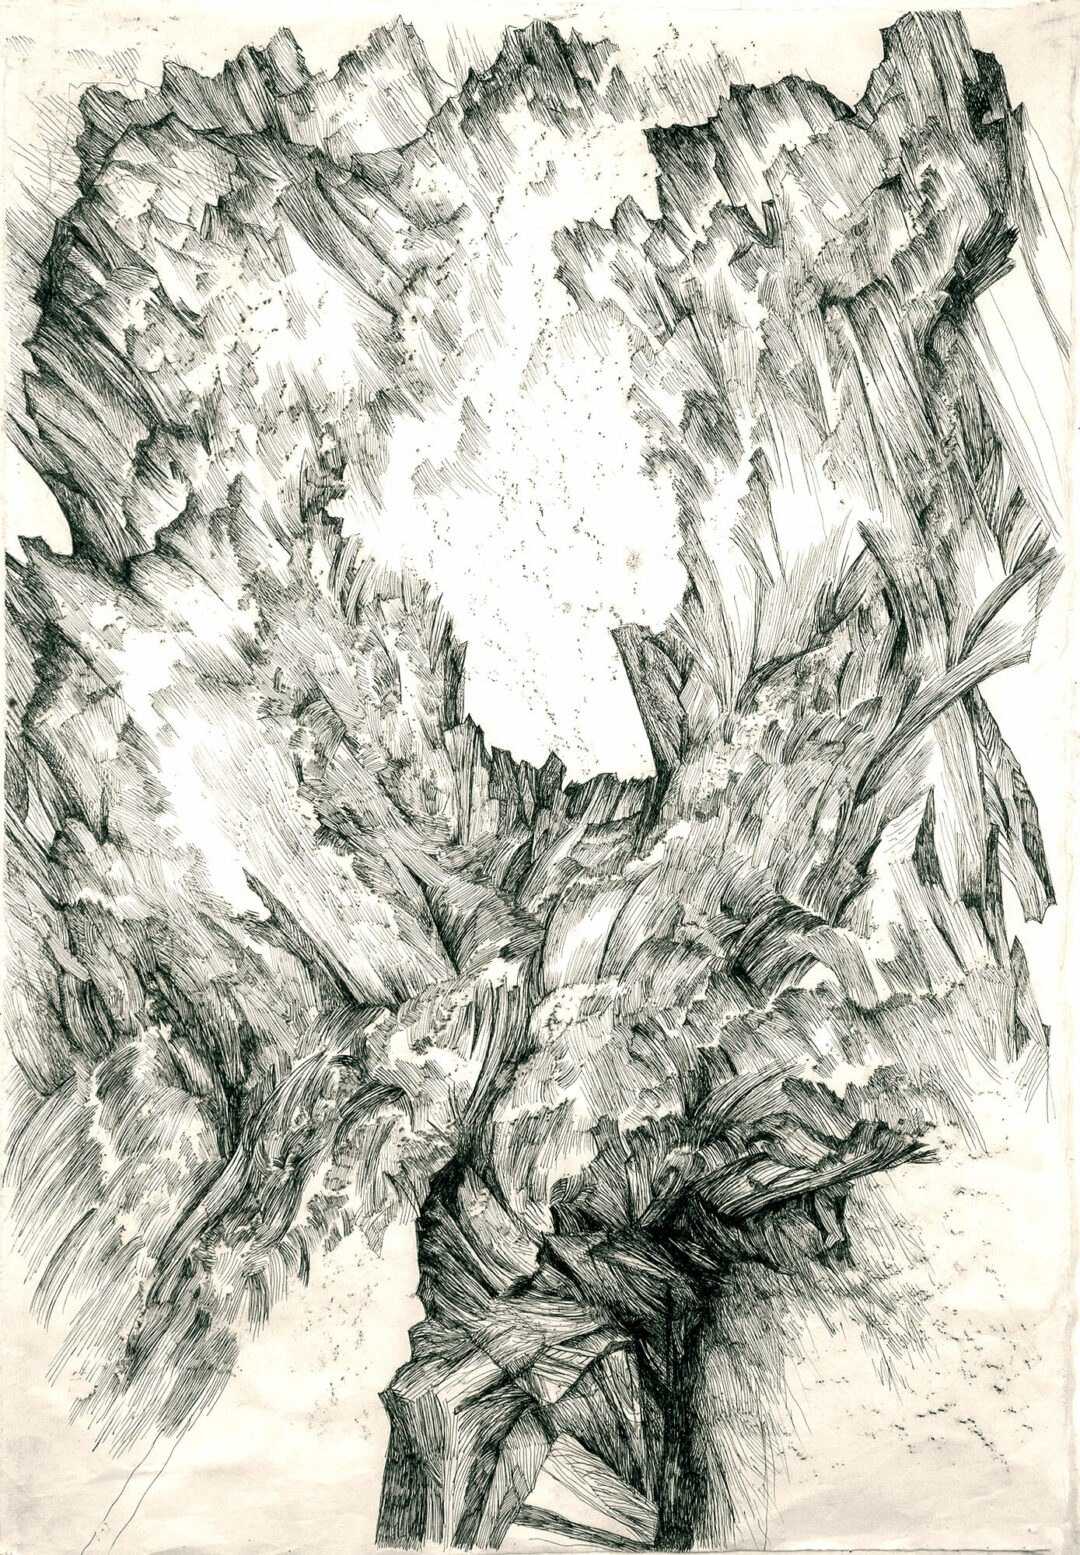 Zea Morvitz - Opening - graphite, ink on paper